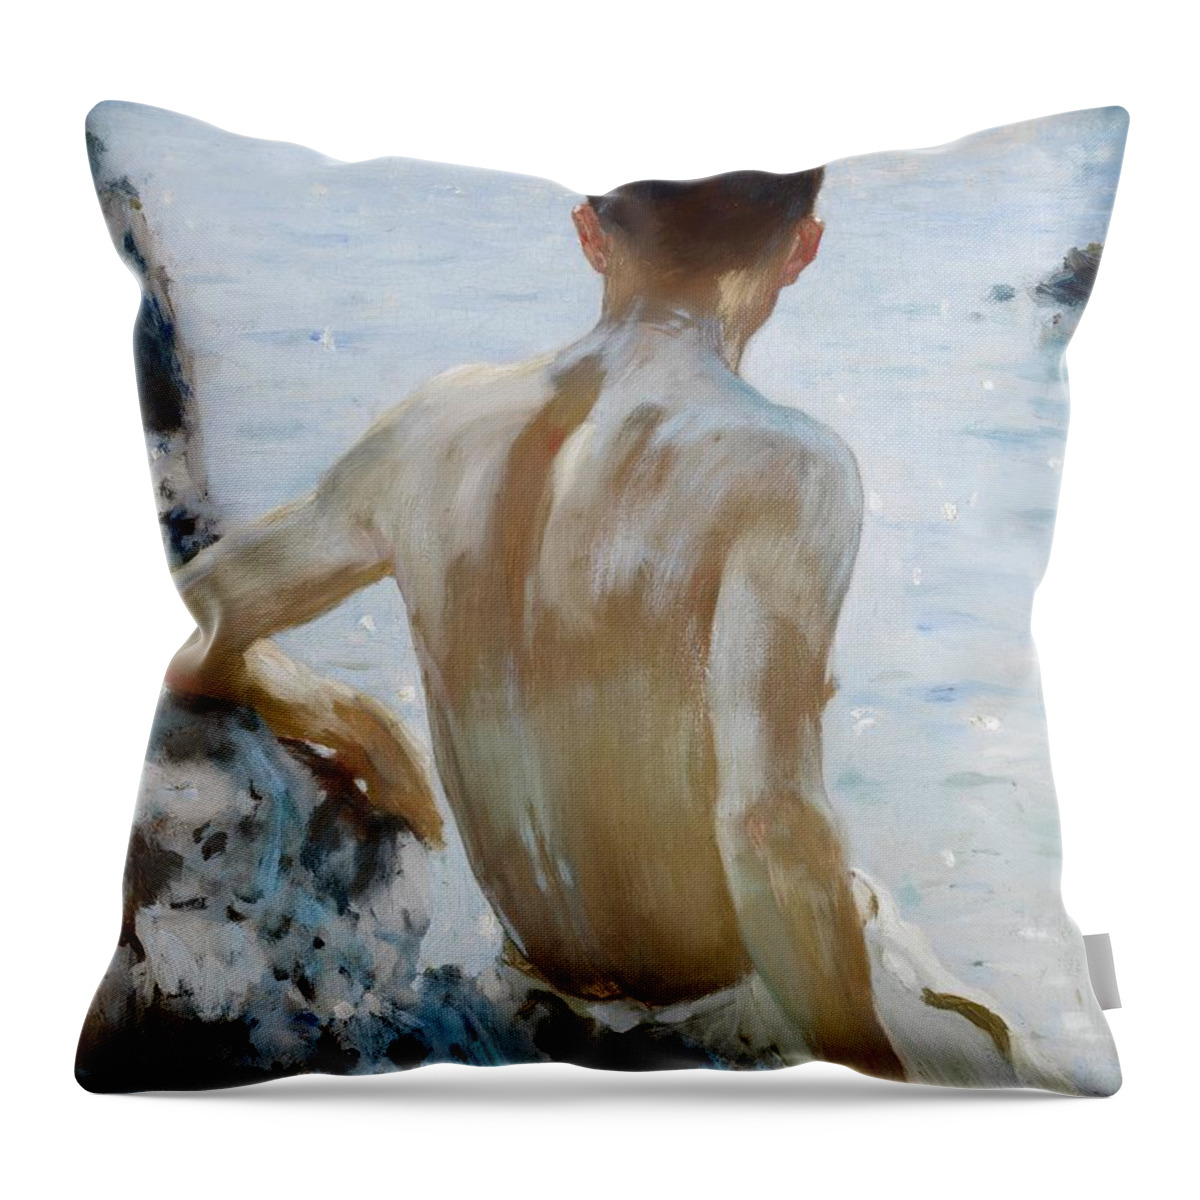 Beach Study Throw Pillow featuring the painting Beach Study by Henry Scott Tuke